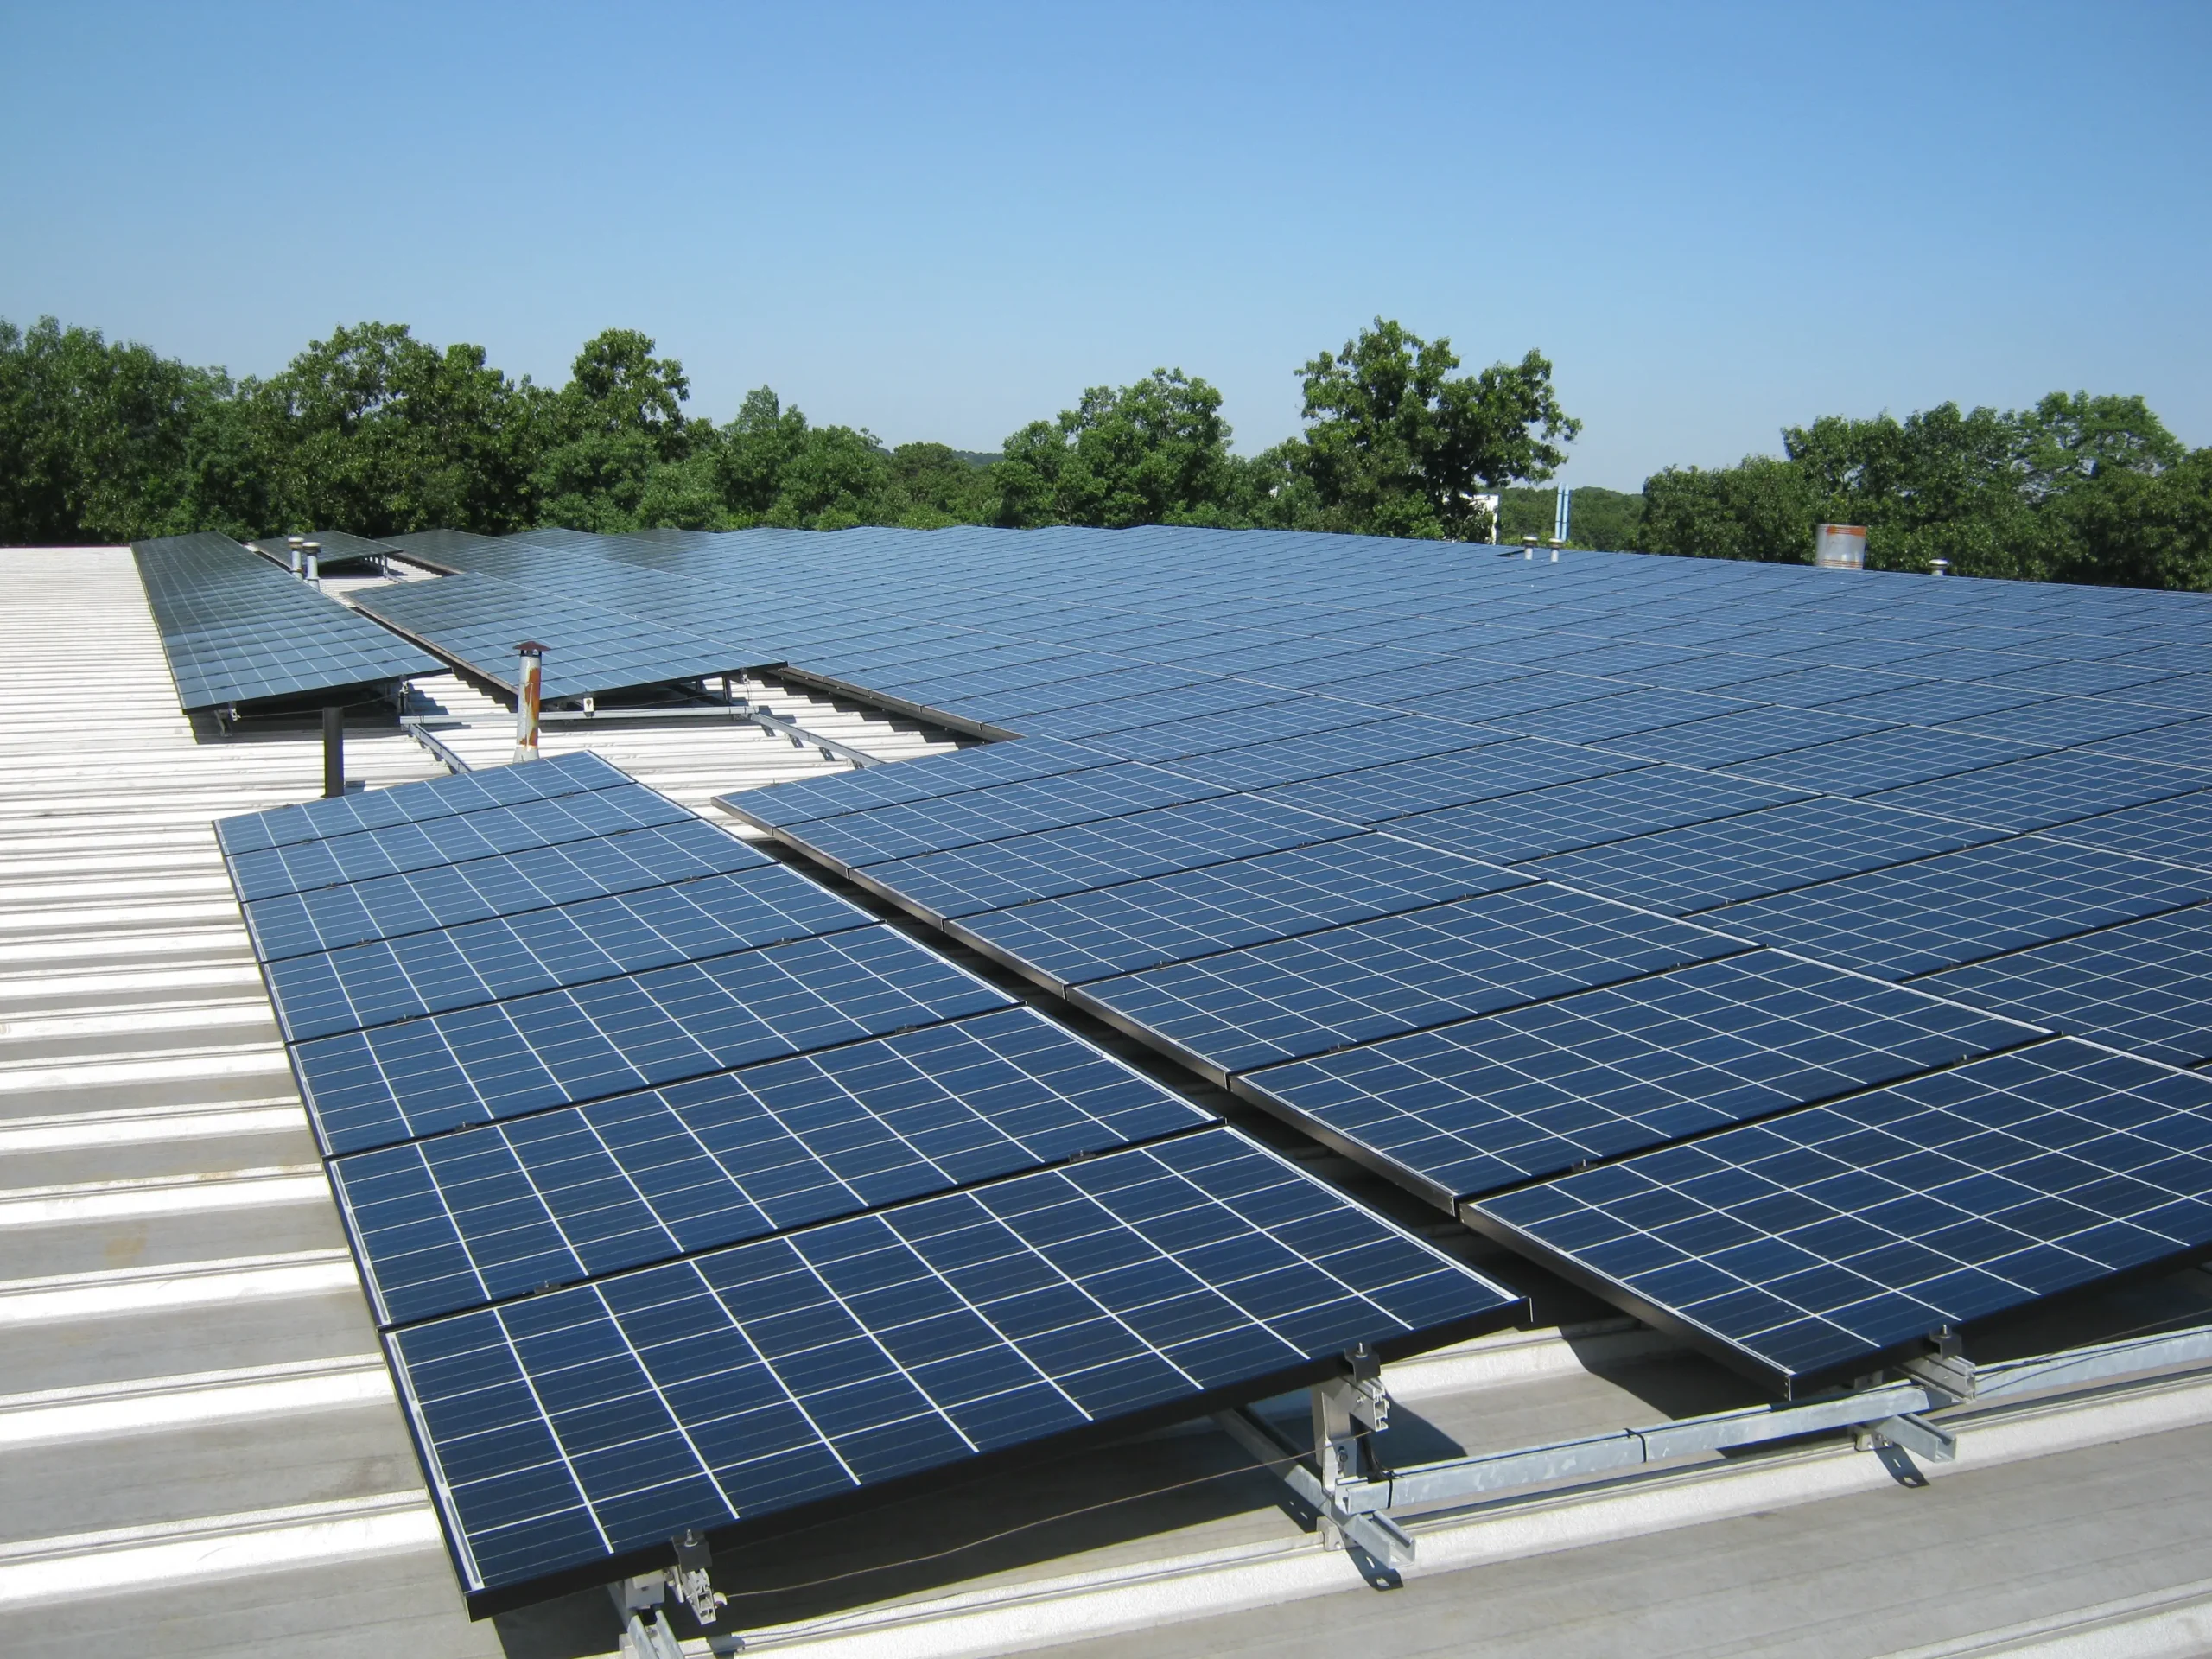 free solar panels in nj - Does NJ have community solar